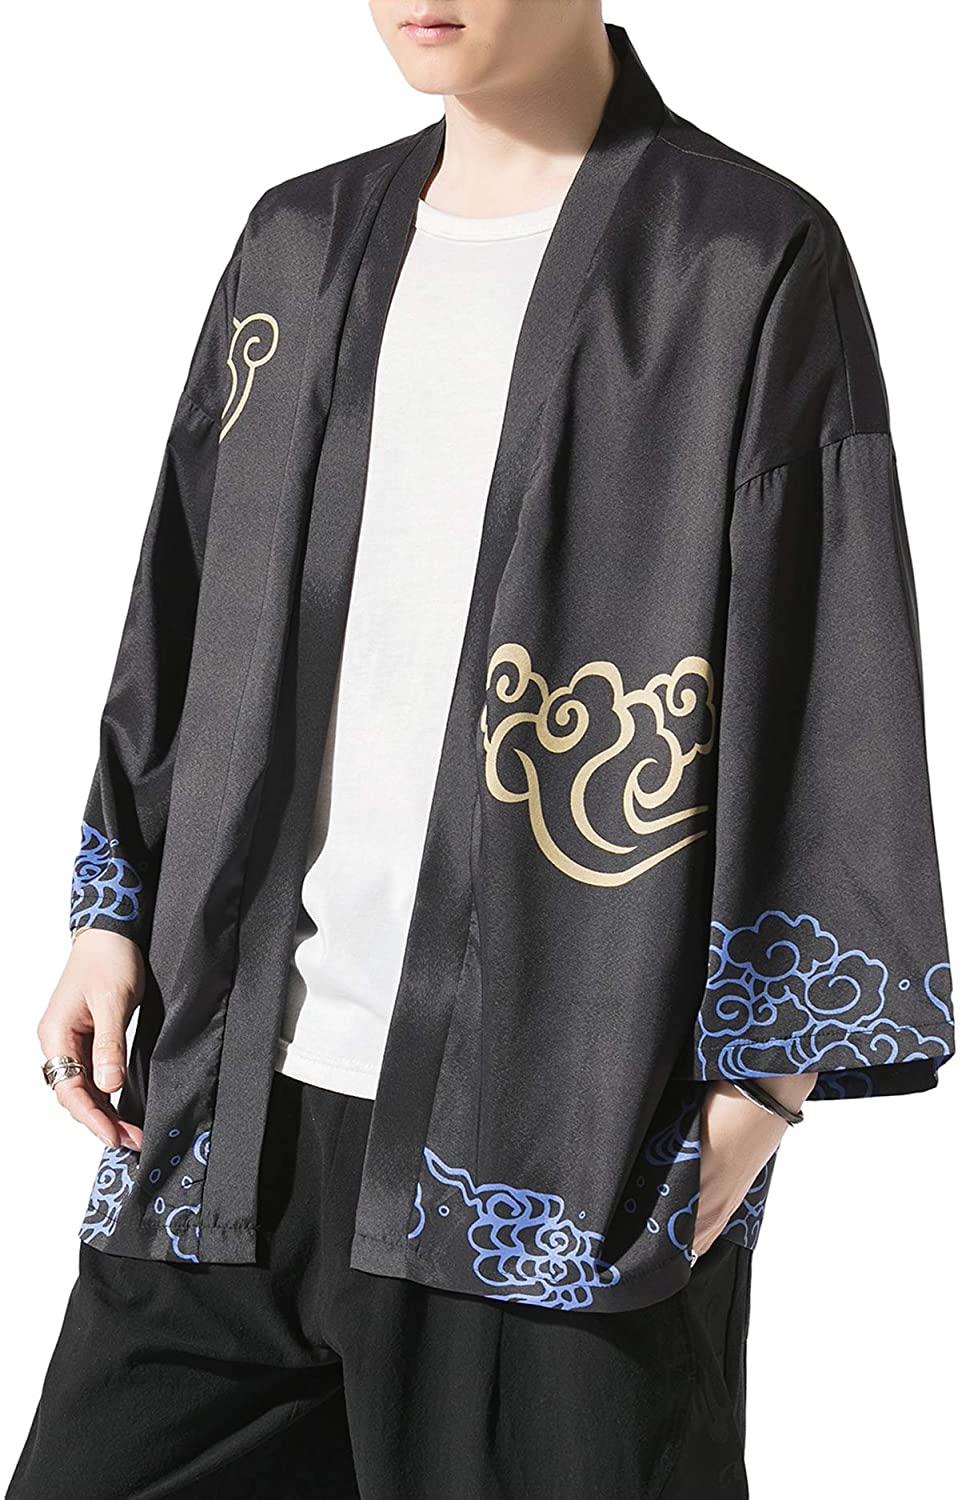 PRIJOUHE Men's Japanese Kimono Cardigan Jackets Casual Long Sleeve Open ...